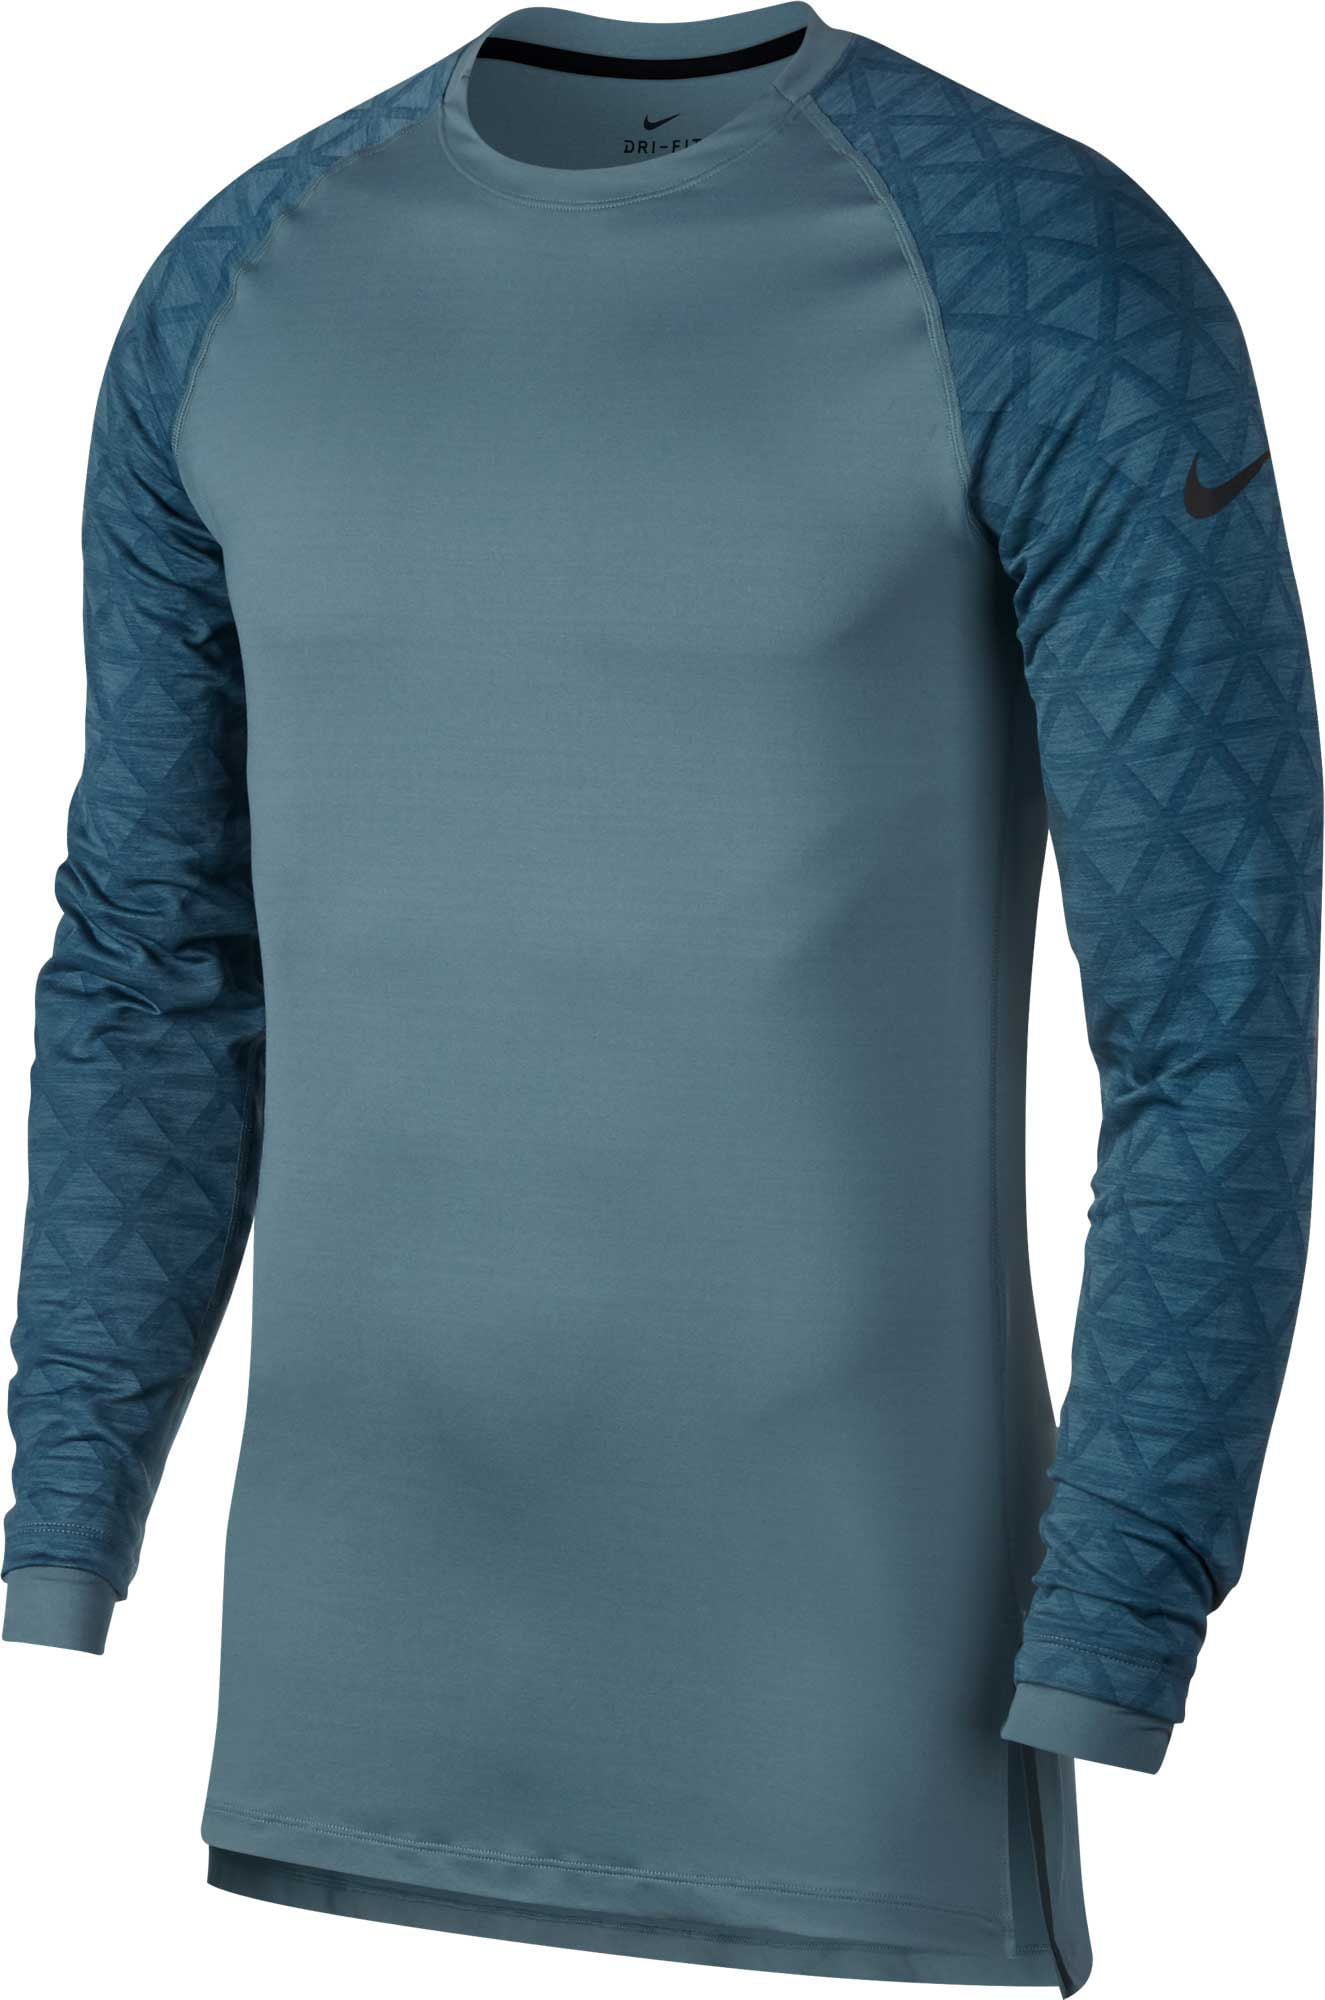 Nike - Nike Men's Pro Therma Utility Long Sleeve Shirt, Celest Teal/Blu ...